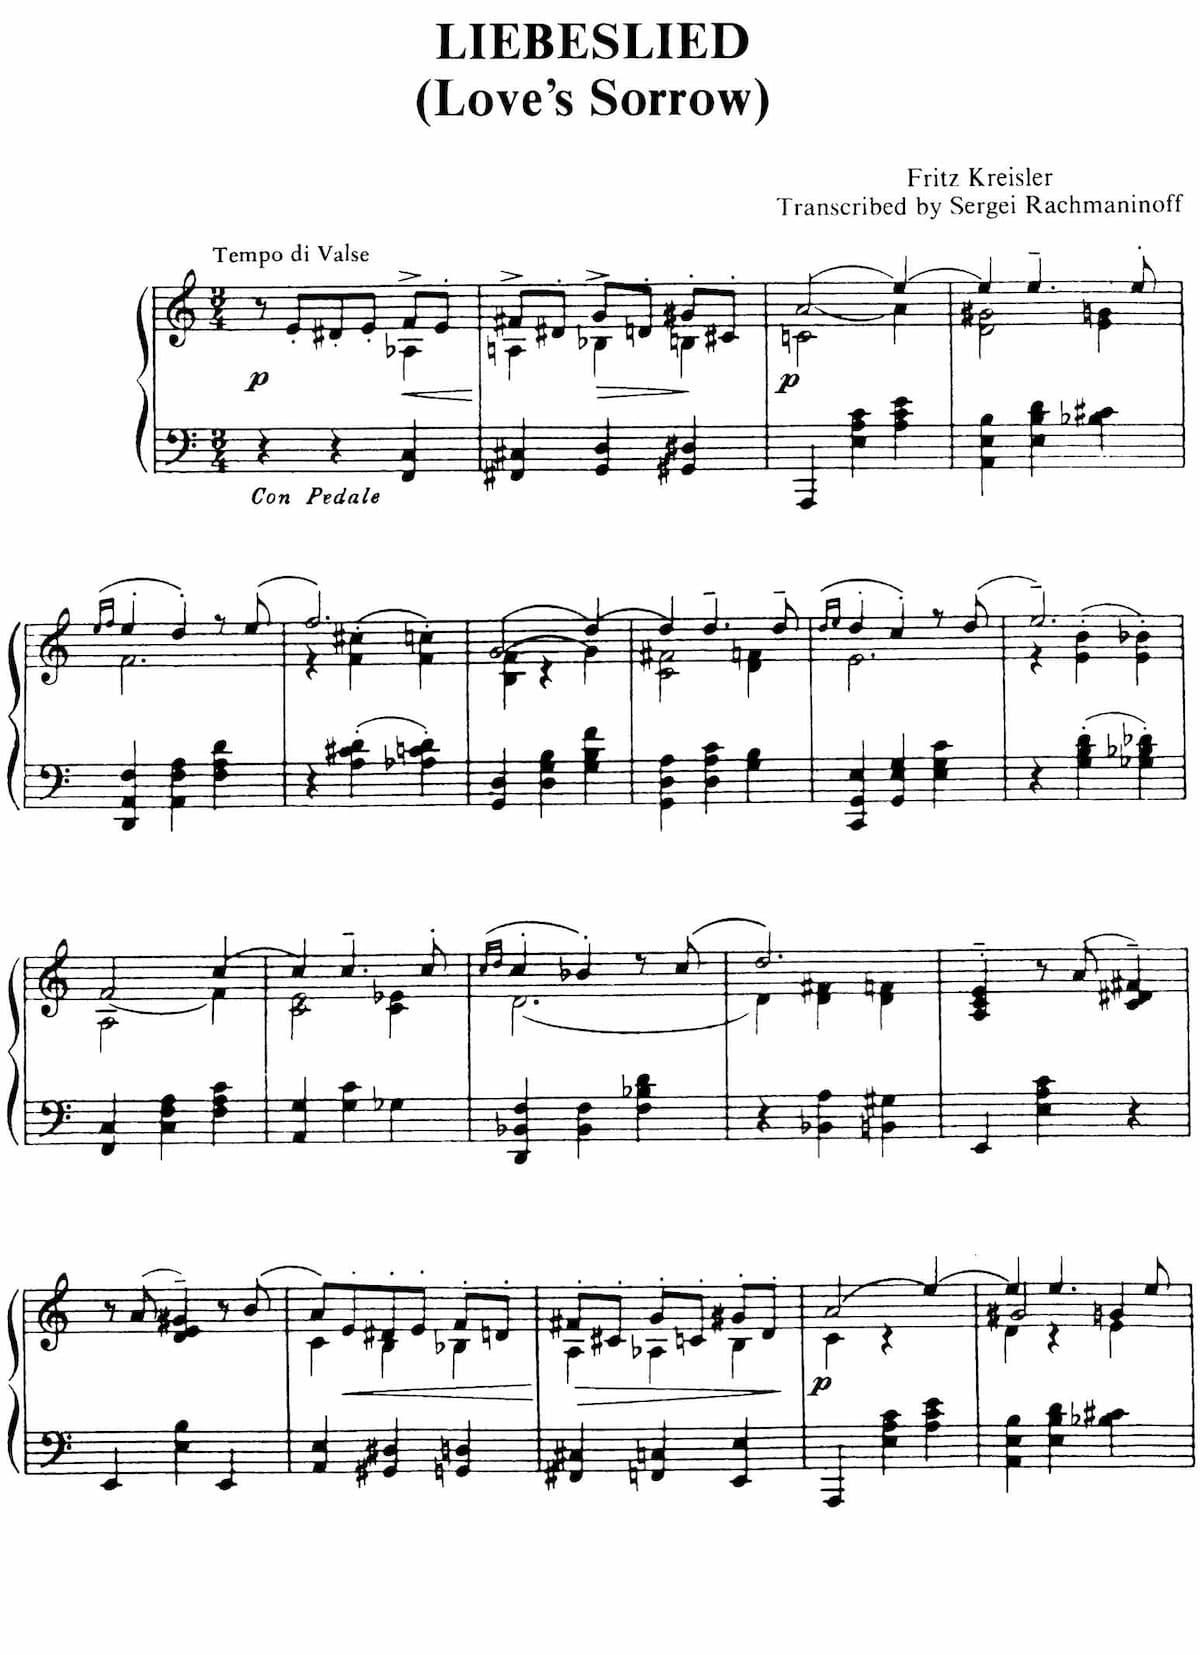 Fritz Kreisler's Liebesleid arranged by Rachmaninoff